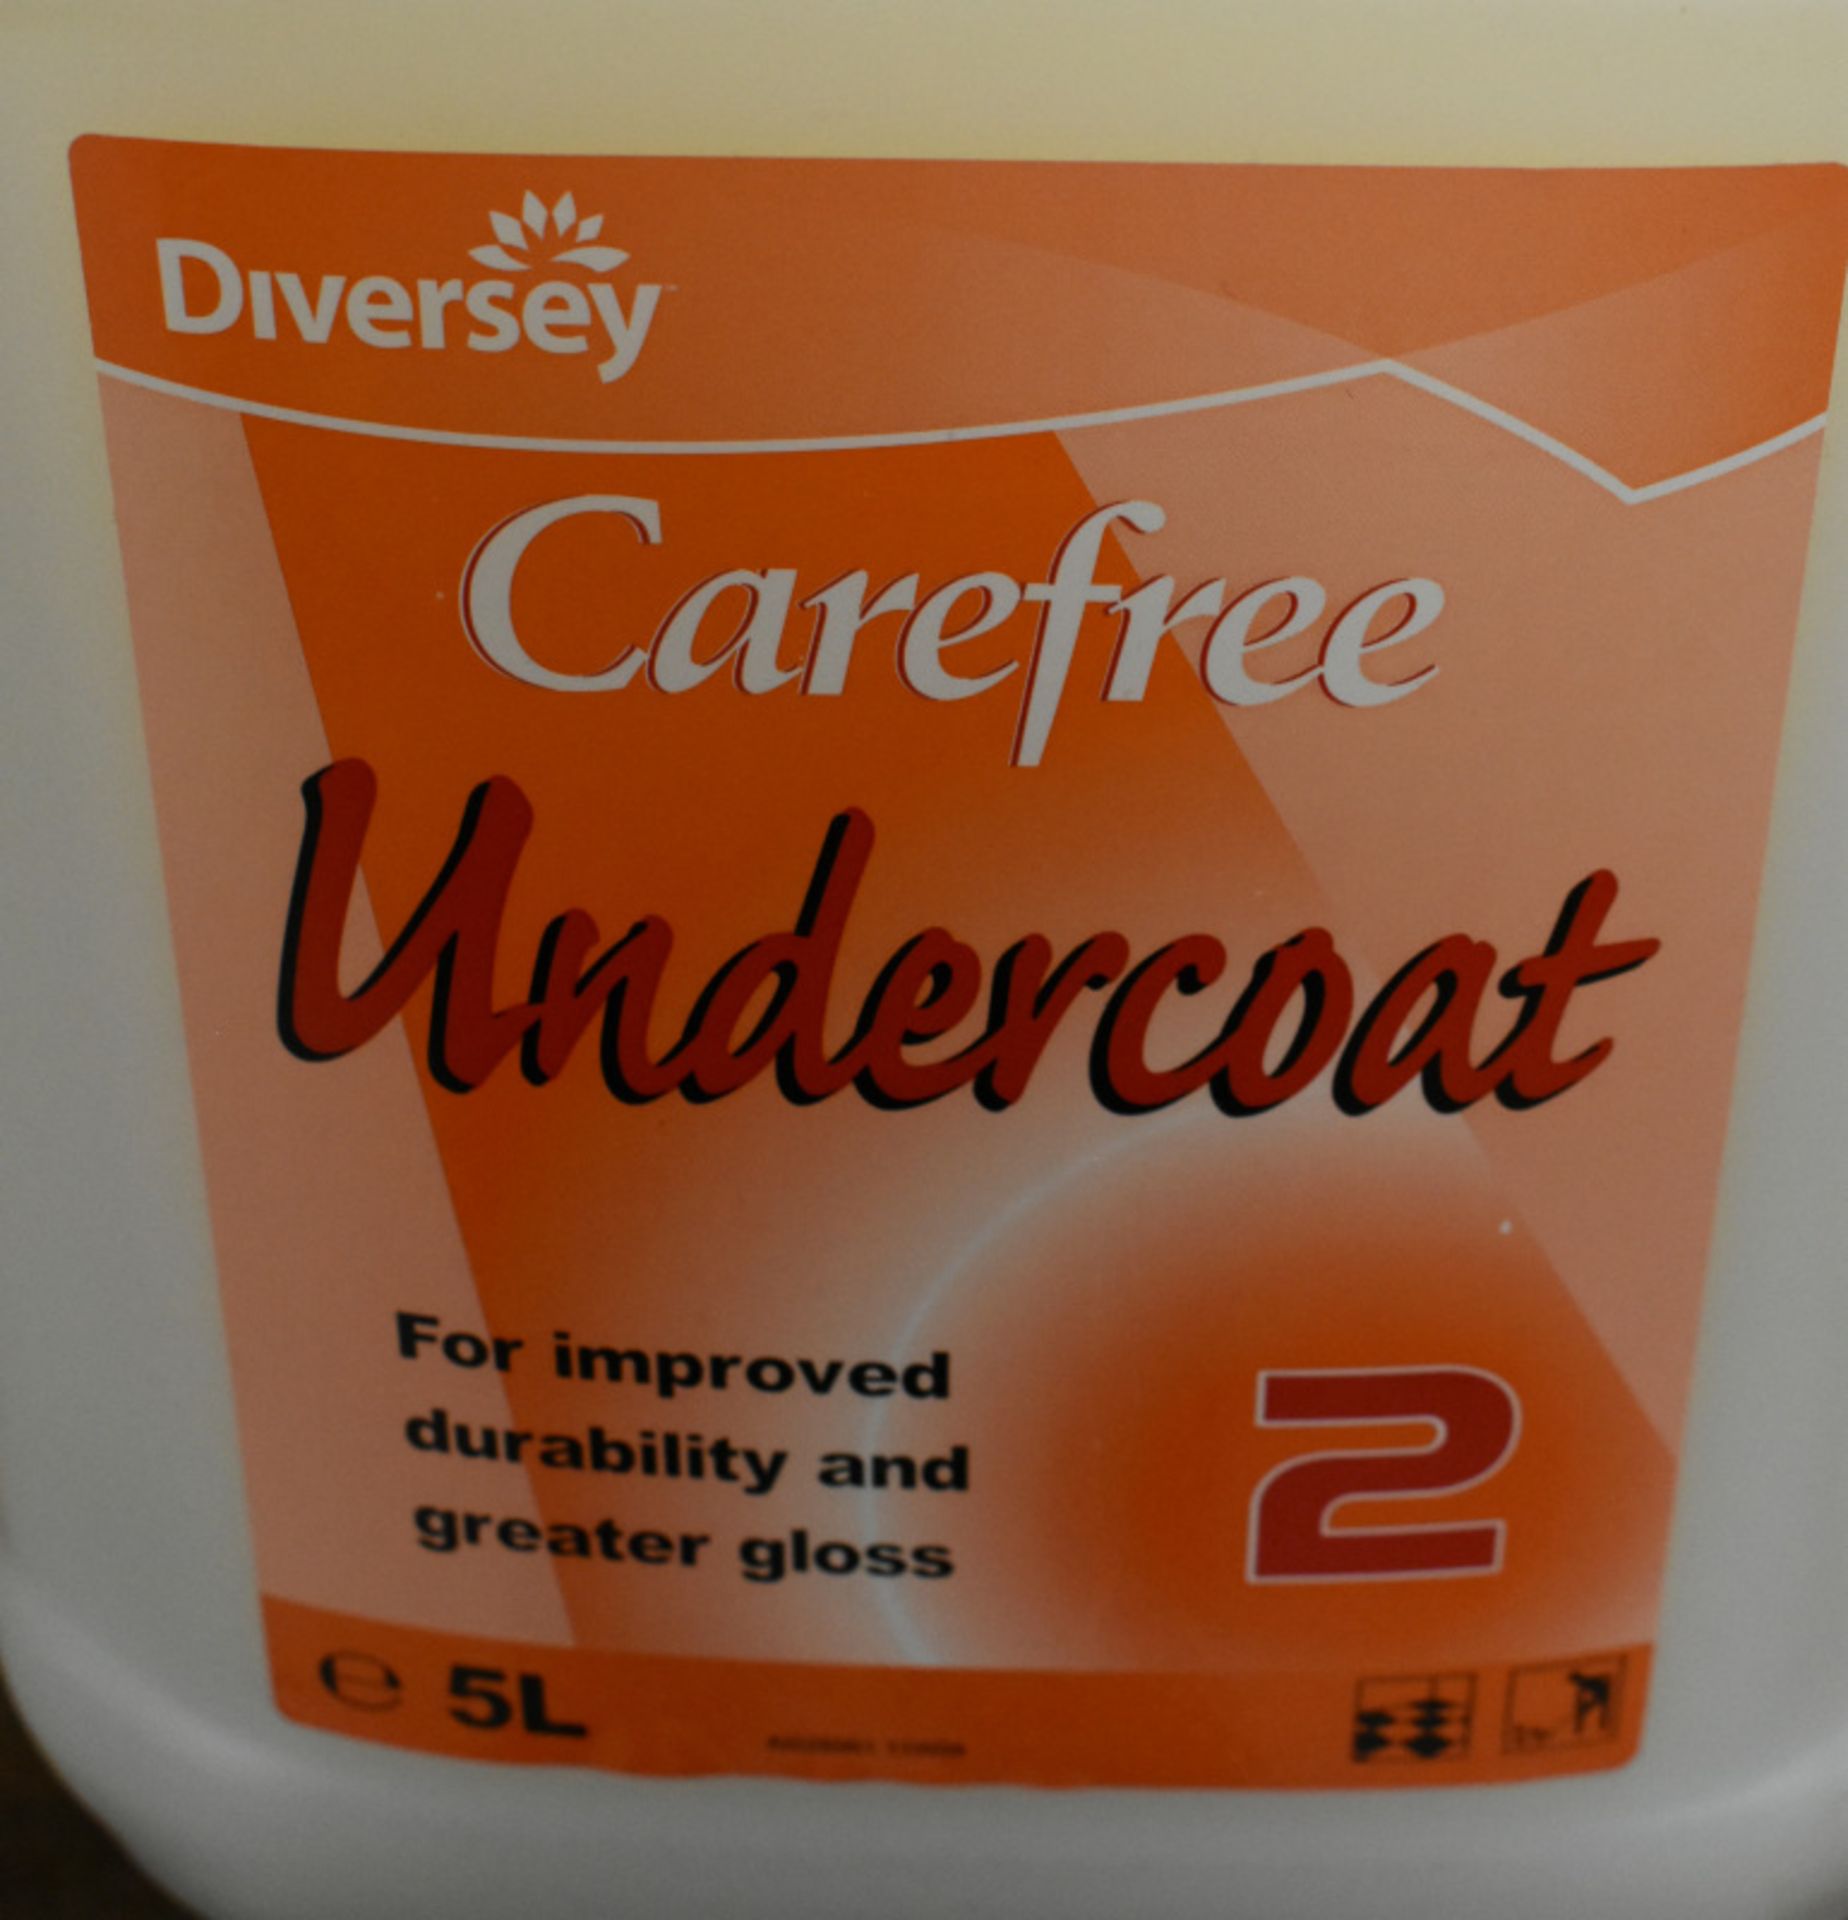 8 x 5L Diversey Carefree Undercoat, 16 x Diversey Carefree Eternum - Image 3 of 3